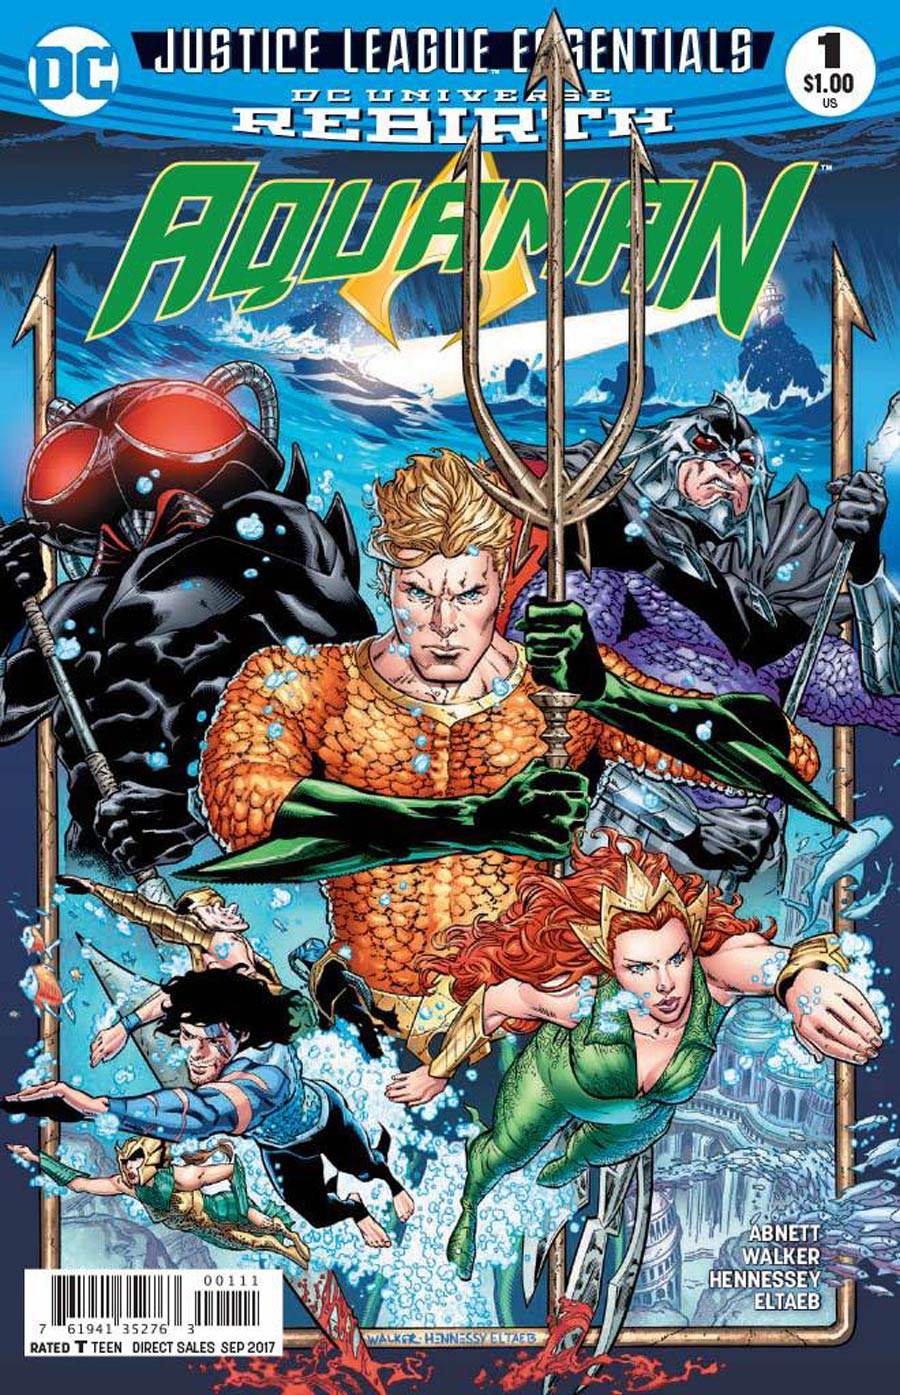 DC Justice League Essentials Aquaman #1 (Rebirth)